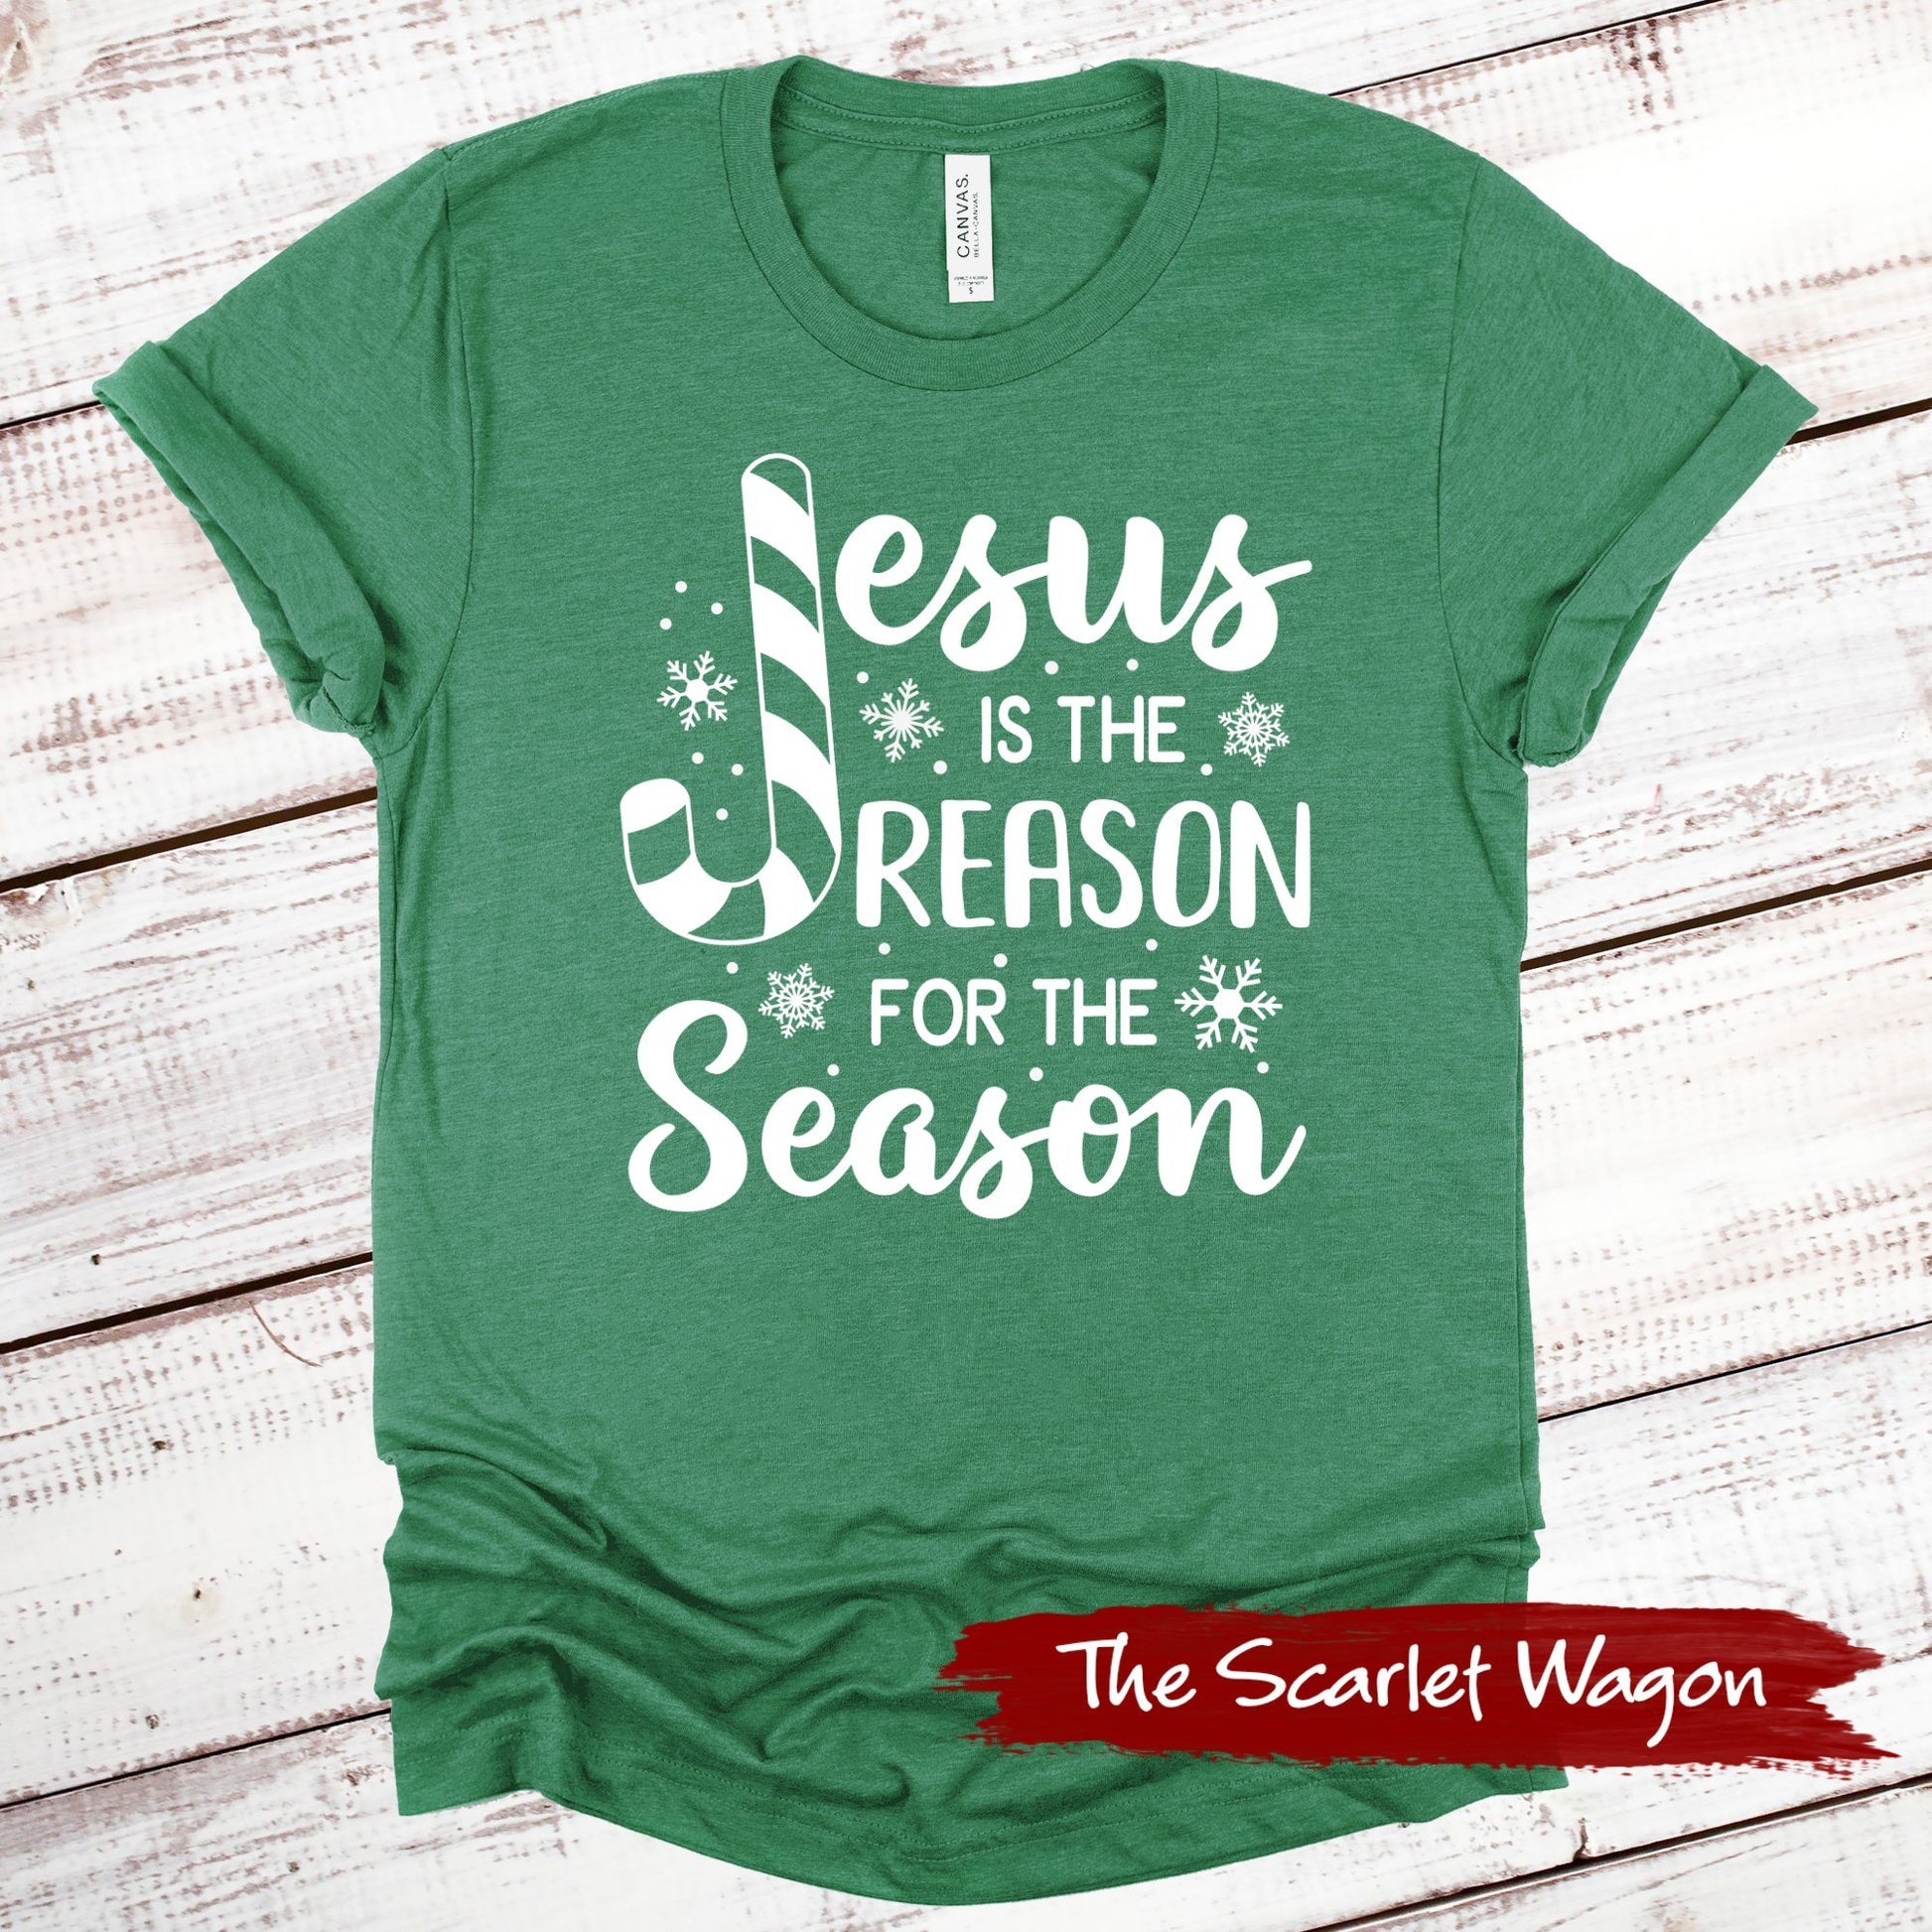 Jesus is the Reason for the Season Christmas Shirt Scarlet Wagon Heather Green XS 